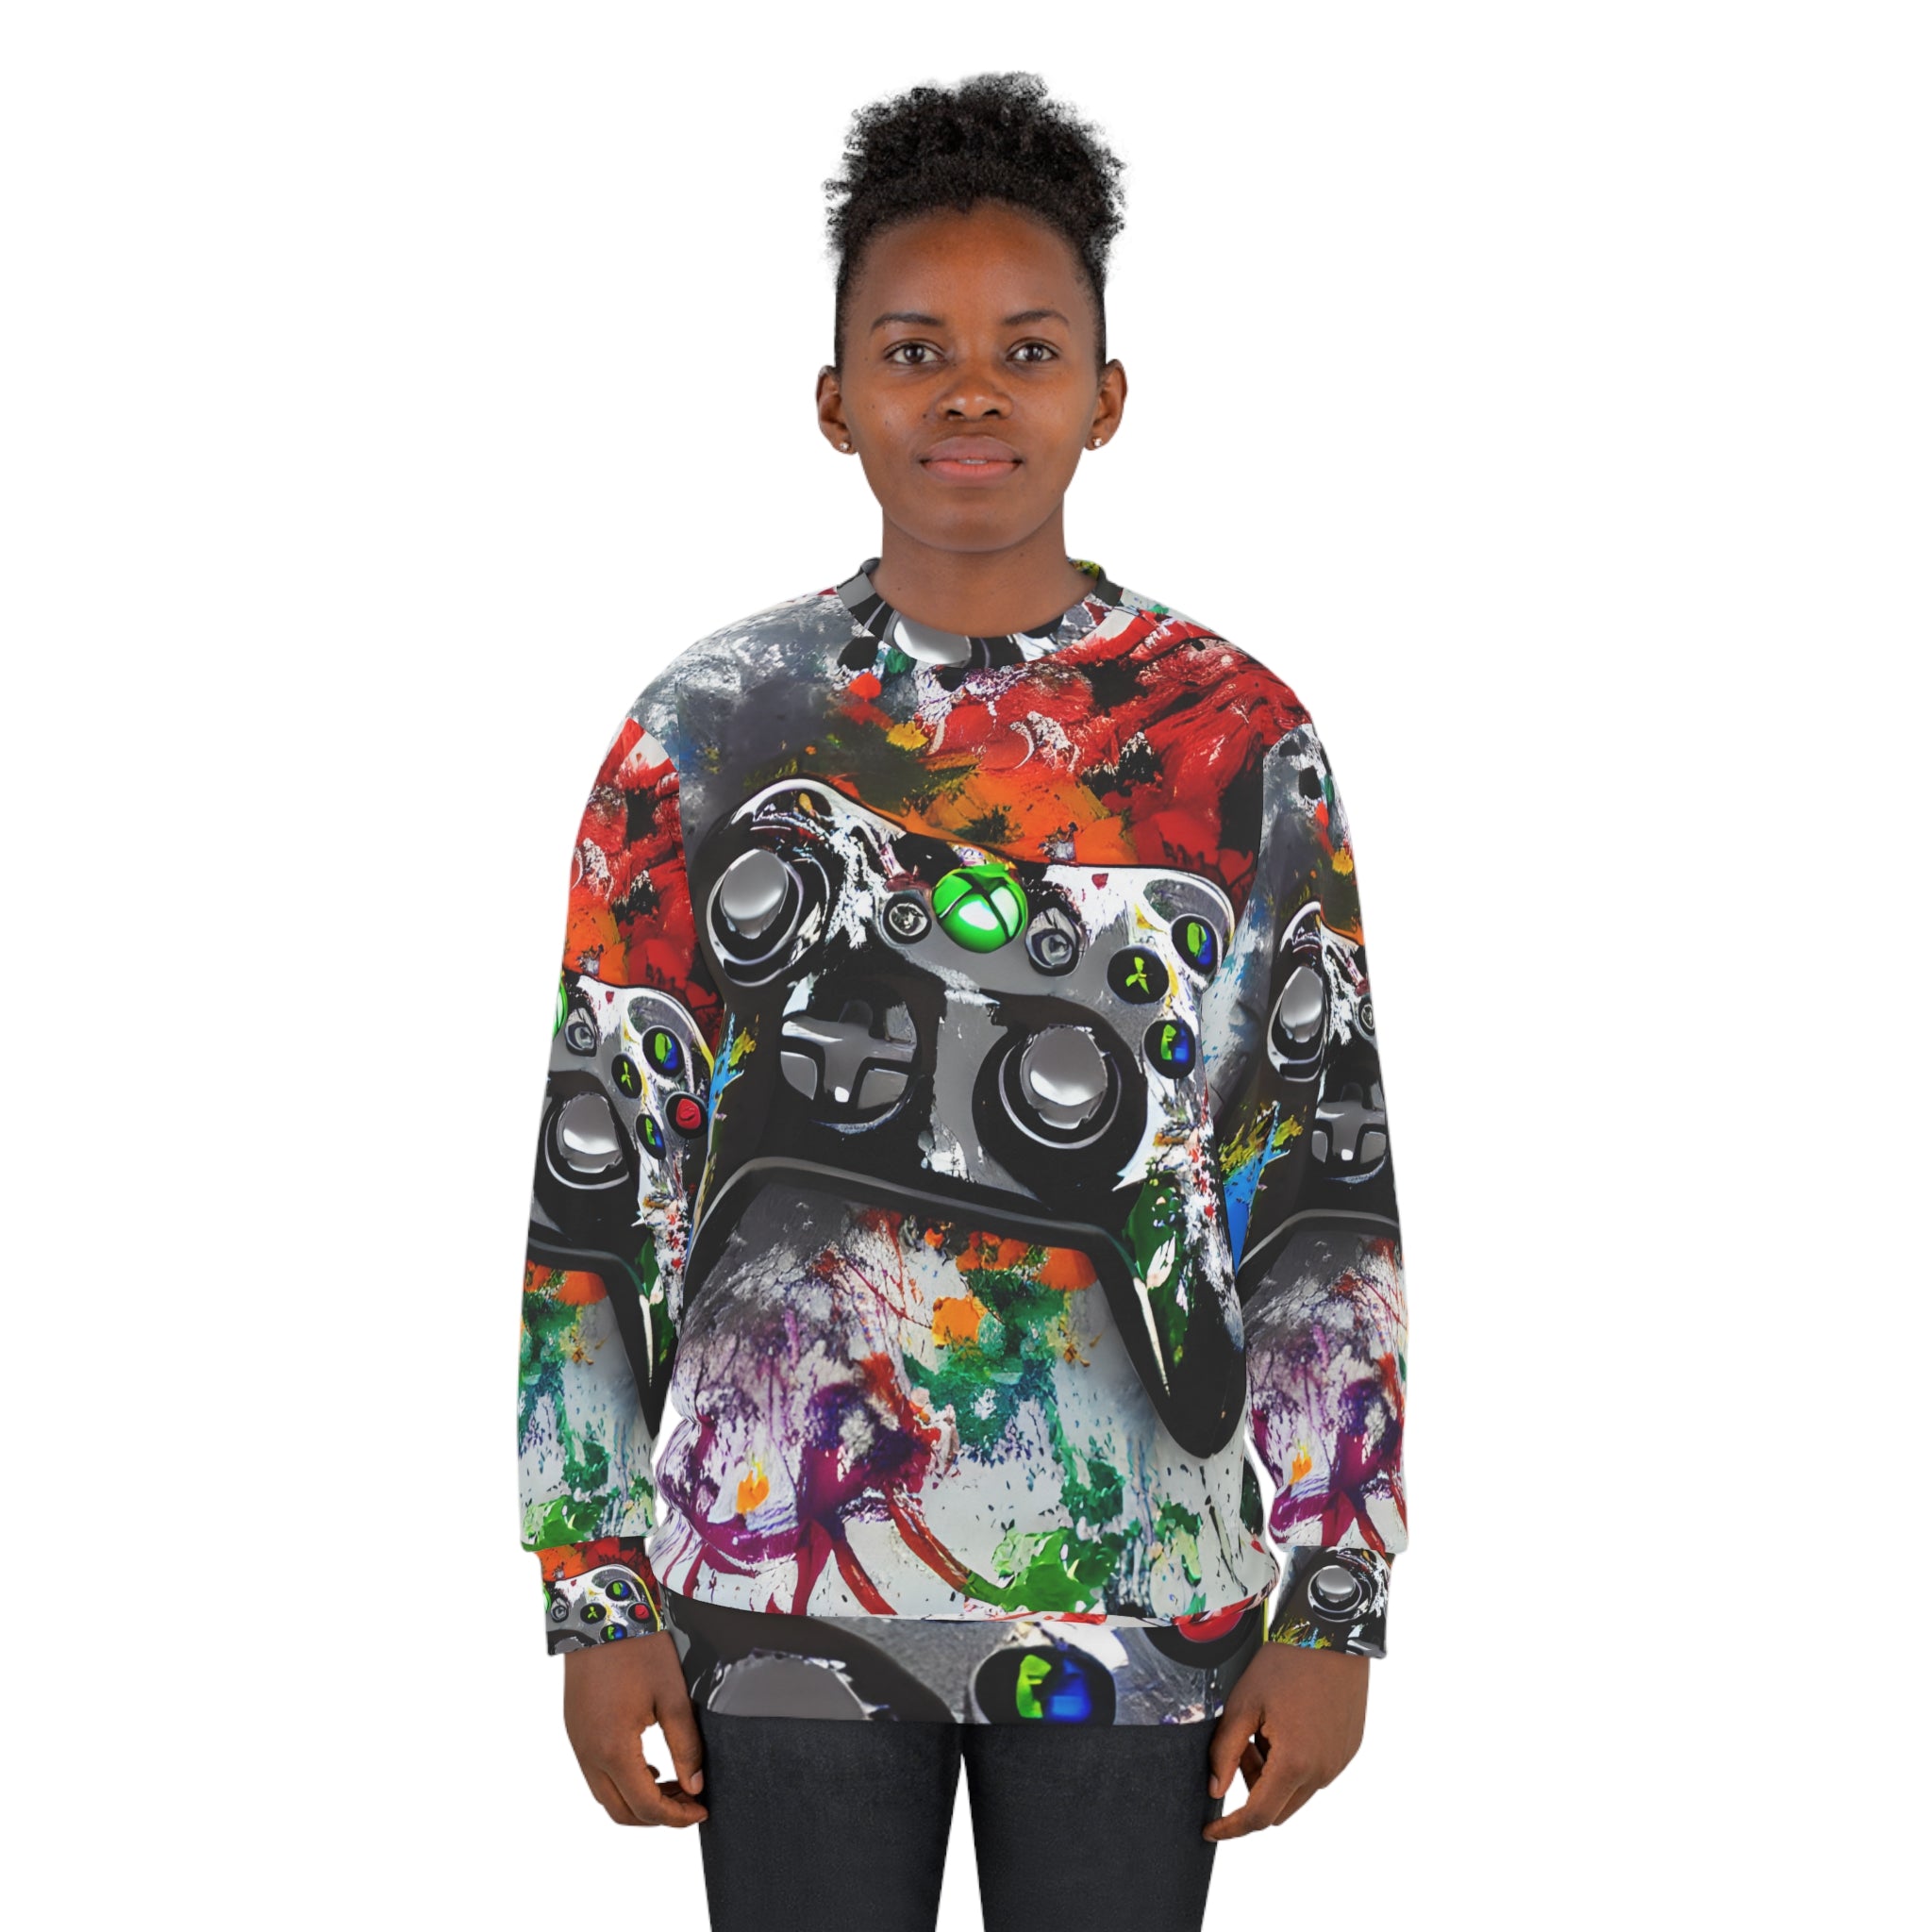 Gamer's Unisex Sweatshirt